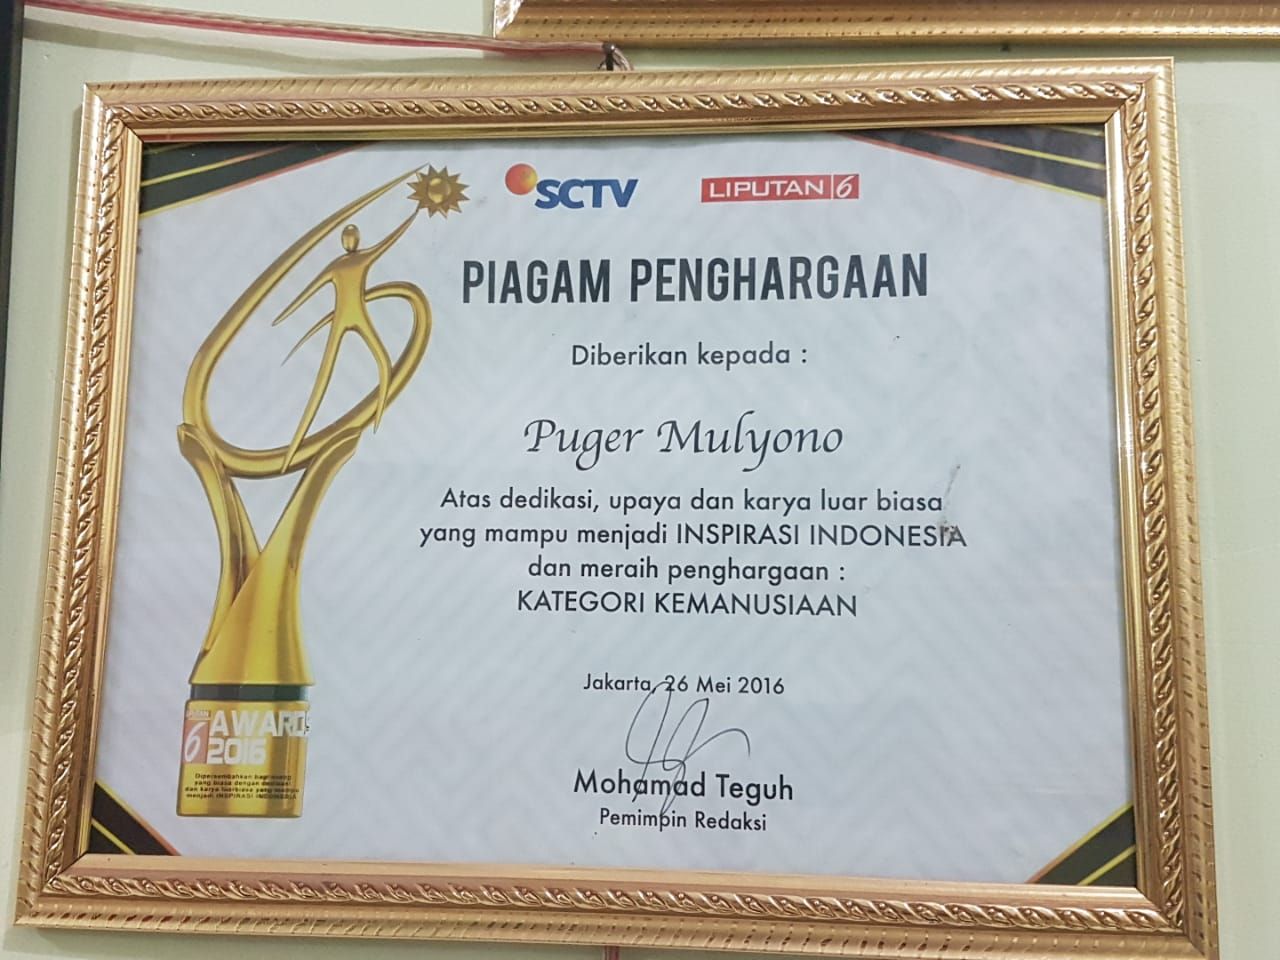 Puger pernah mendapat piagam penghargaan dari SCTV